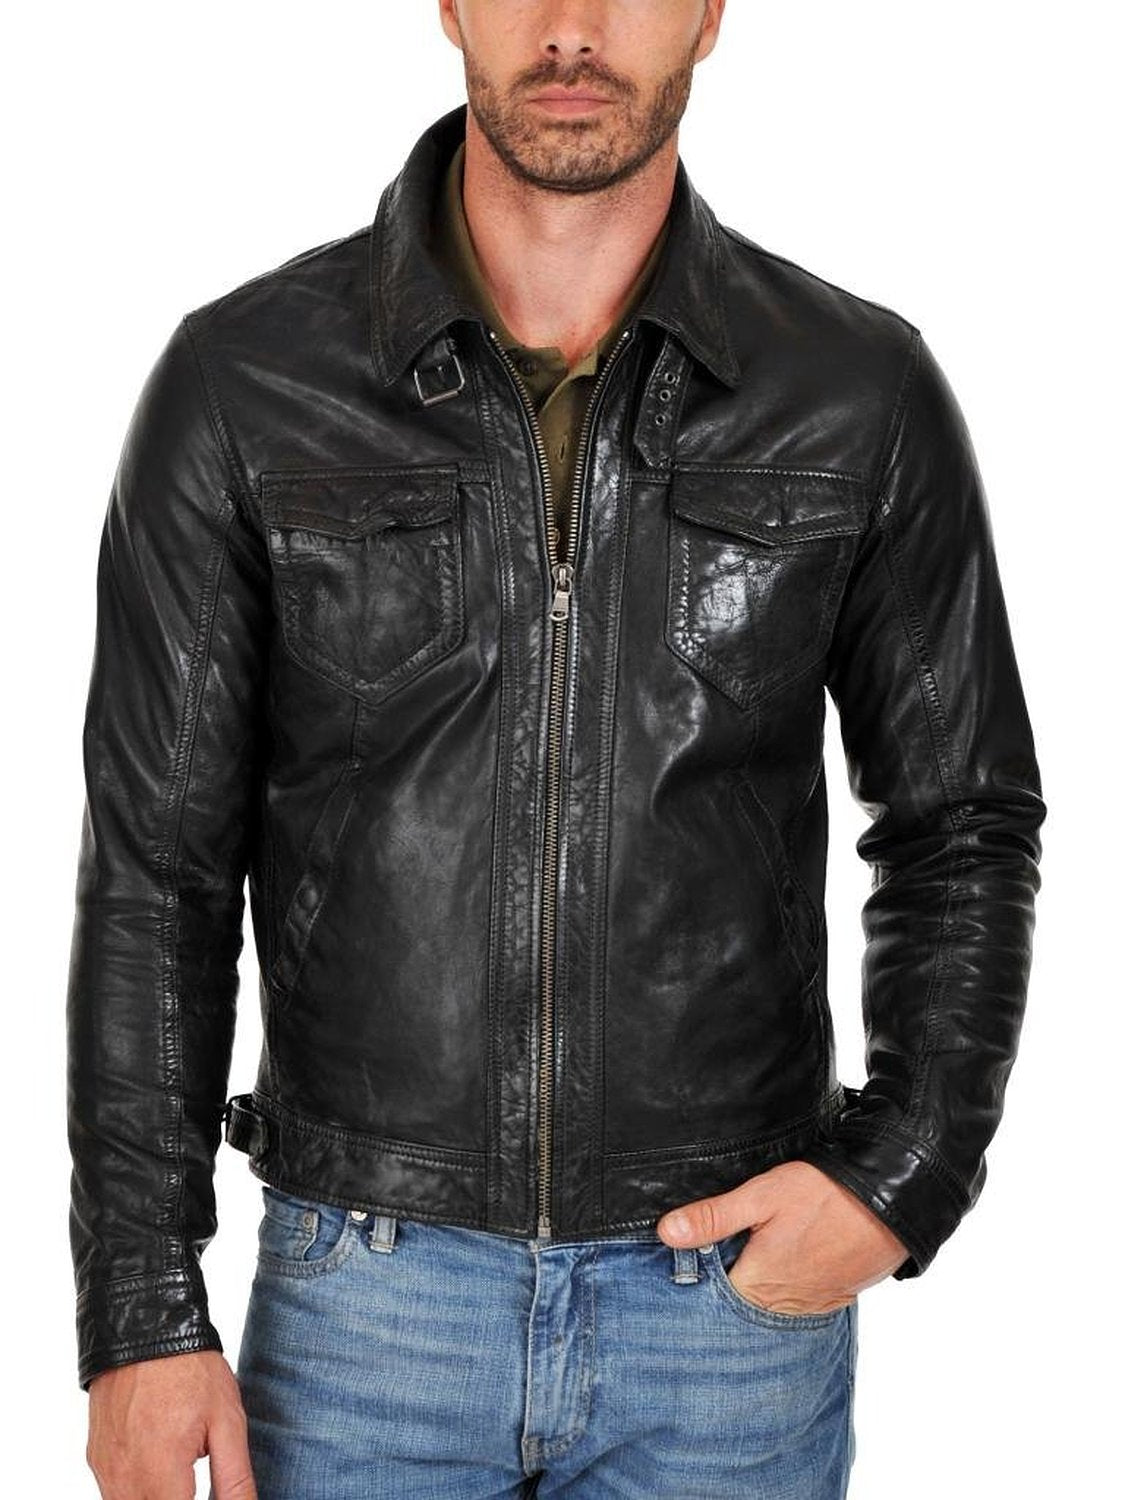 Leather Jackets Hub Mens Genuine Cowhide Leather Jacket (Black, Regal Jacket) - 1501010